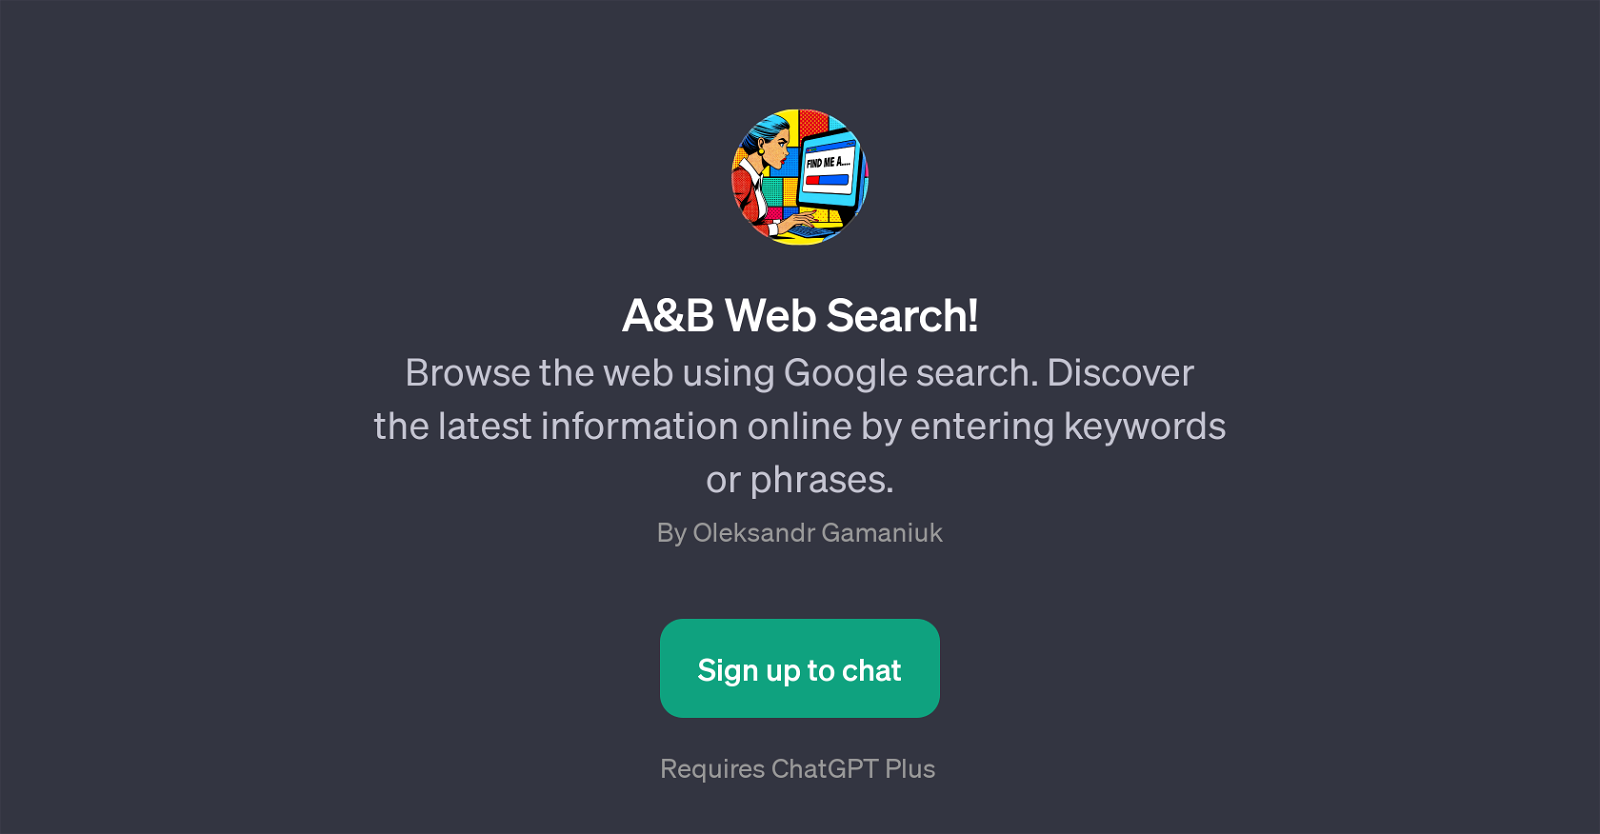 A&B Web Search website